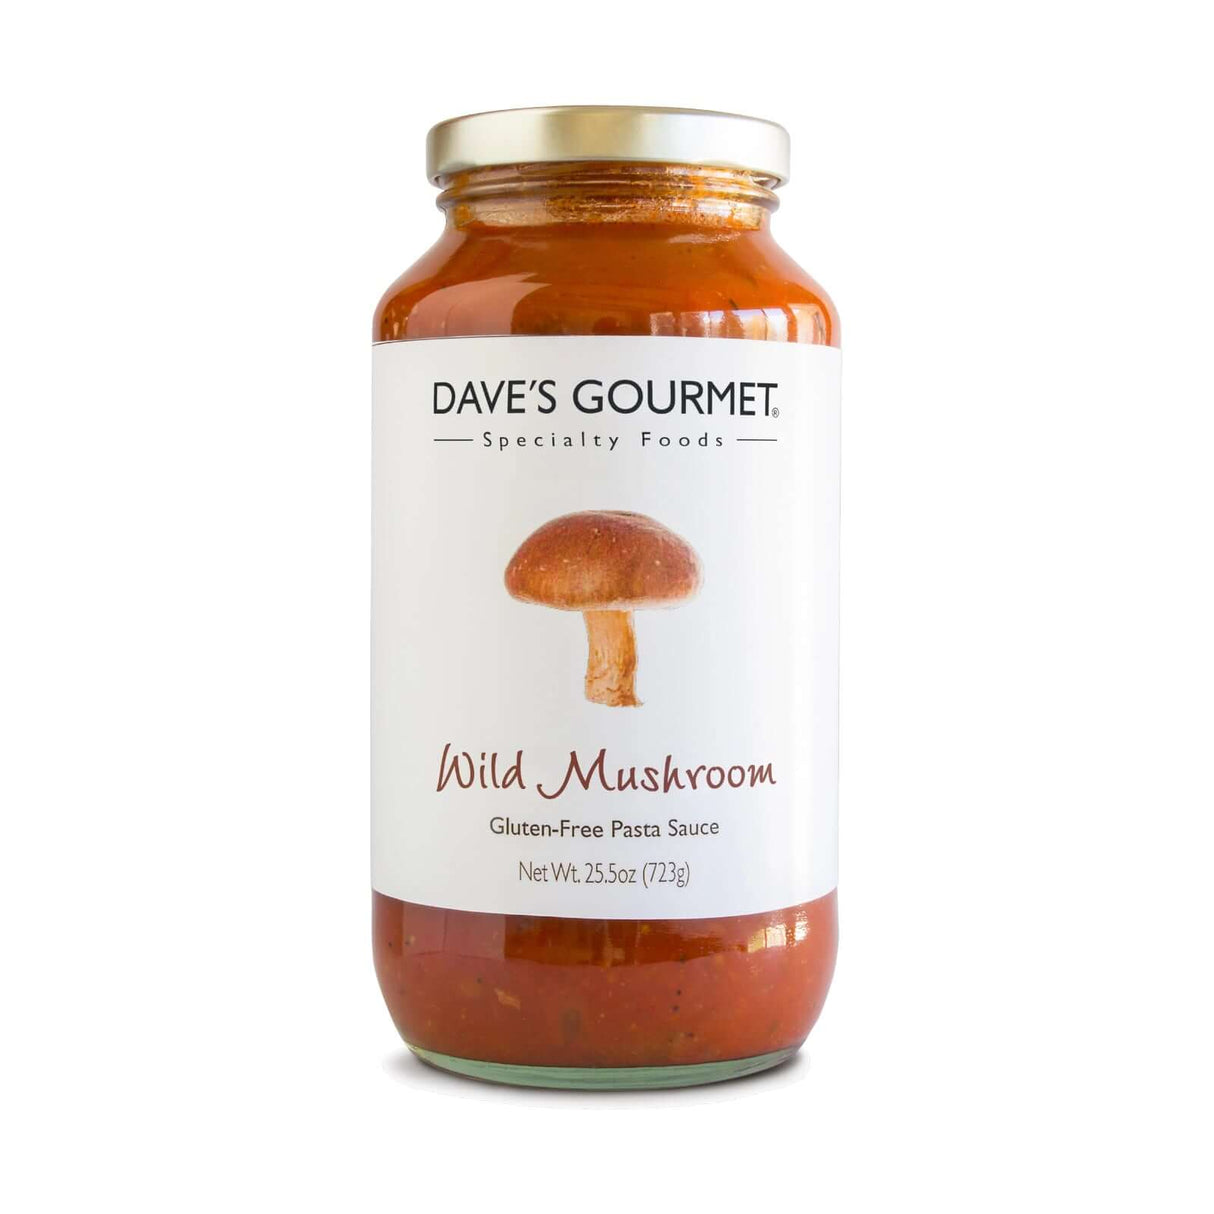 DAVE'S GOURMET Wild Mushroom Pasta Sauce